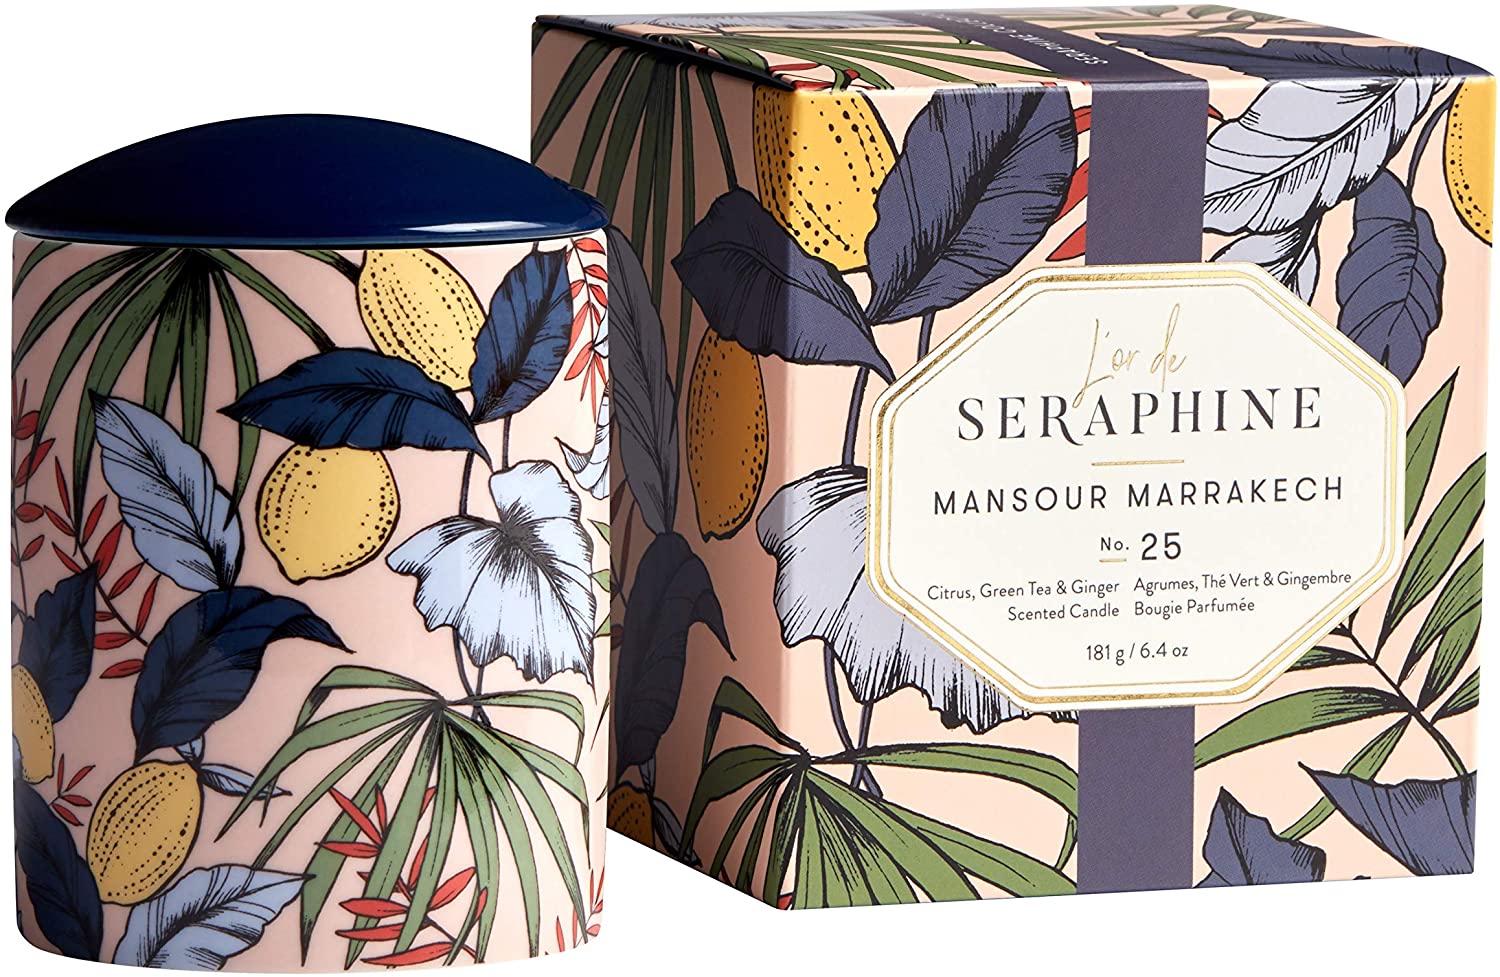 L'or de Seraphine designer scented candle Mansour Marrakech